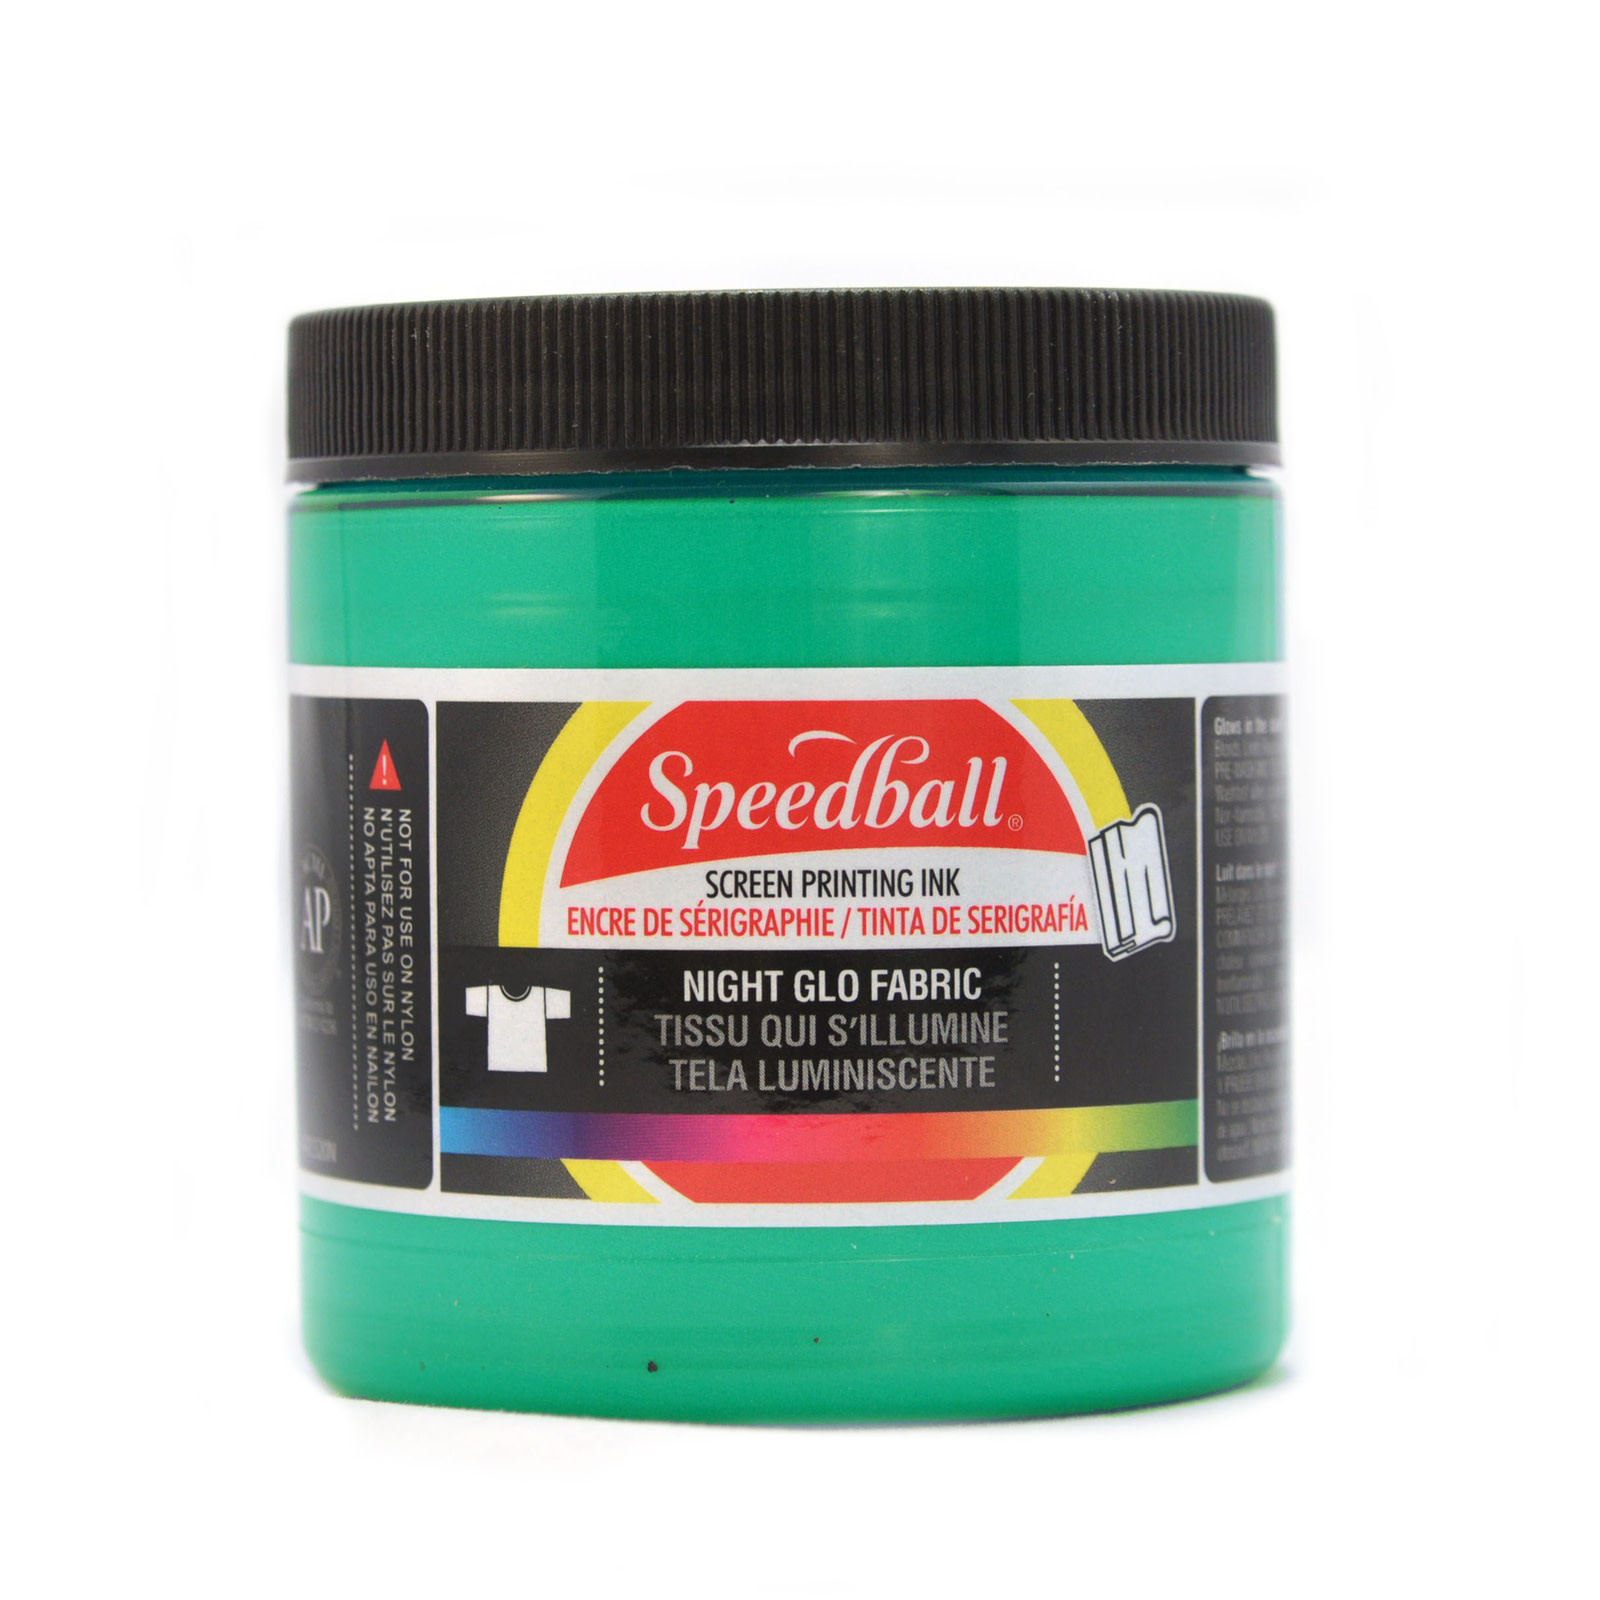 Speedball Night Glo Phosphorescent Screen Printing Ink, Green - 8 oz.